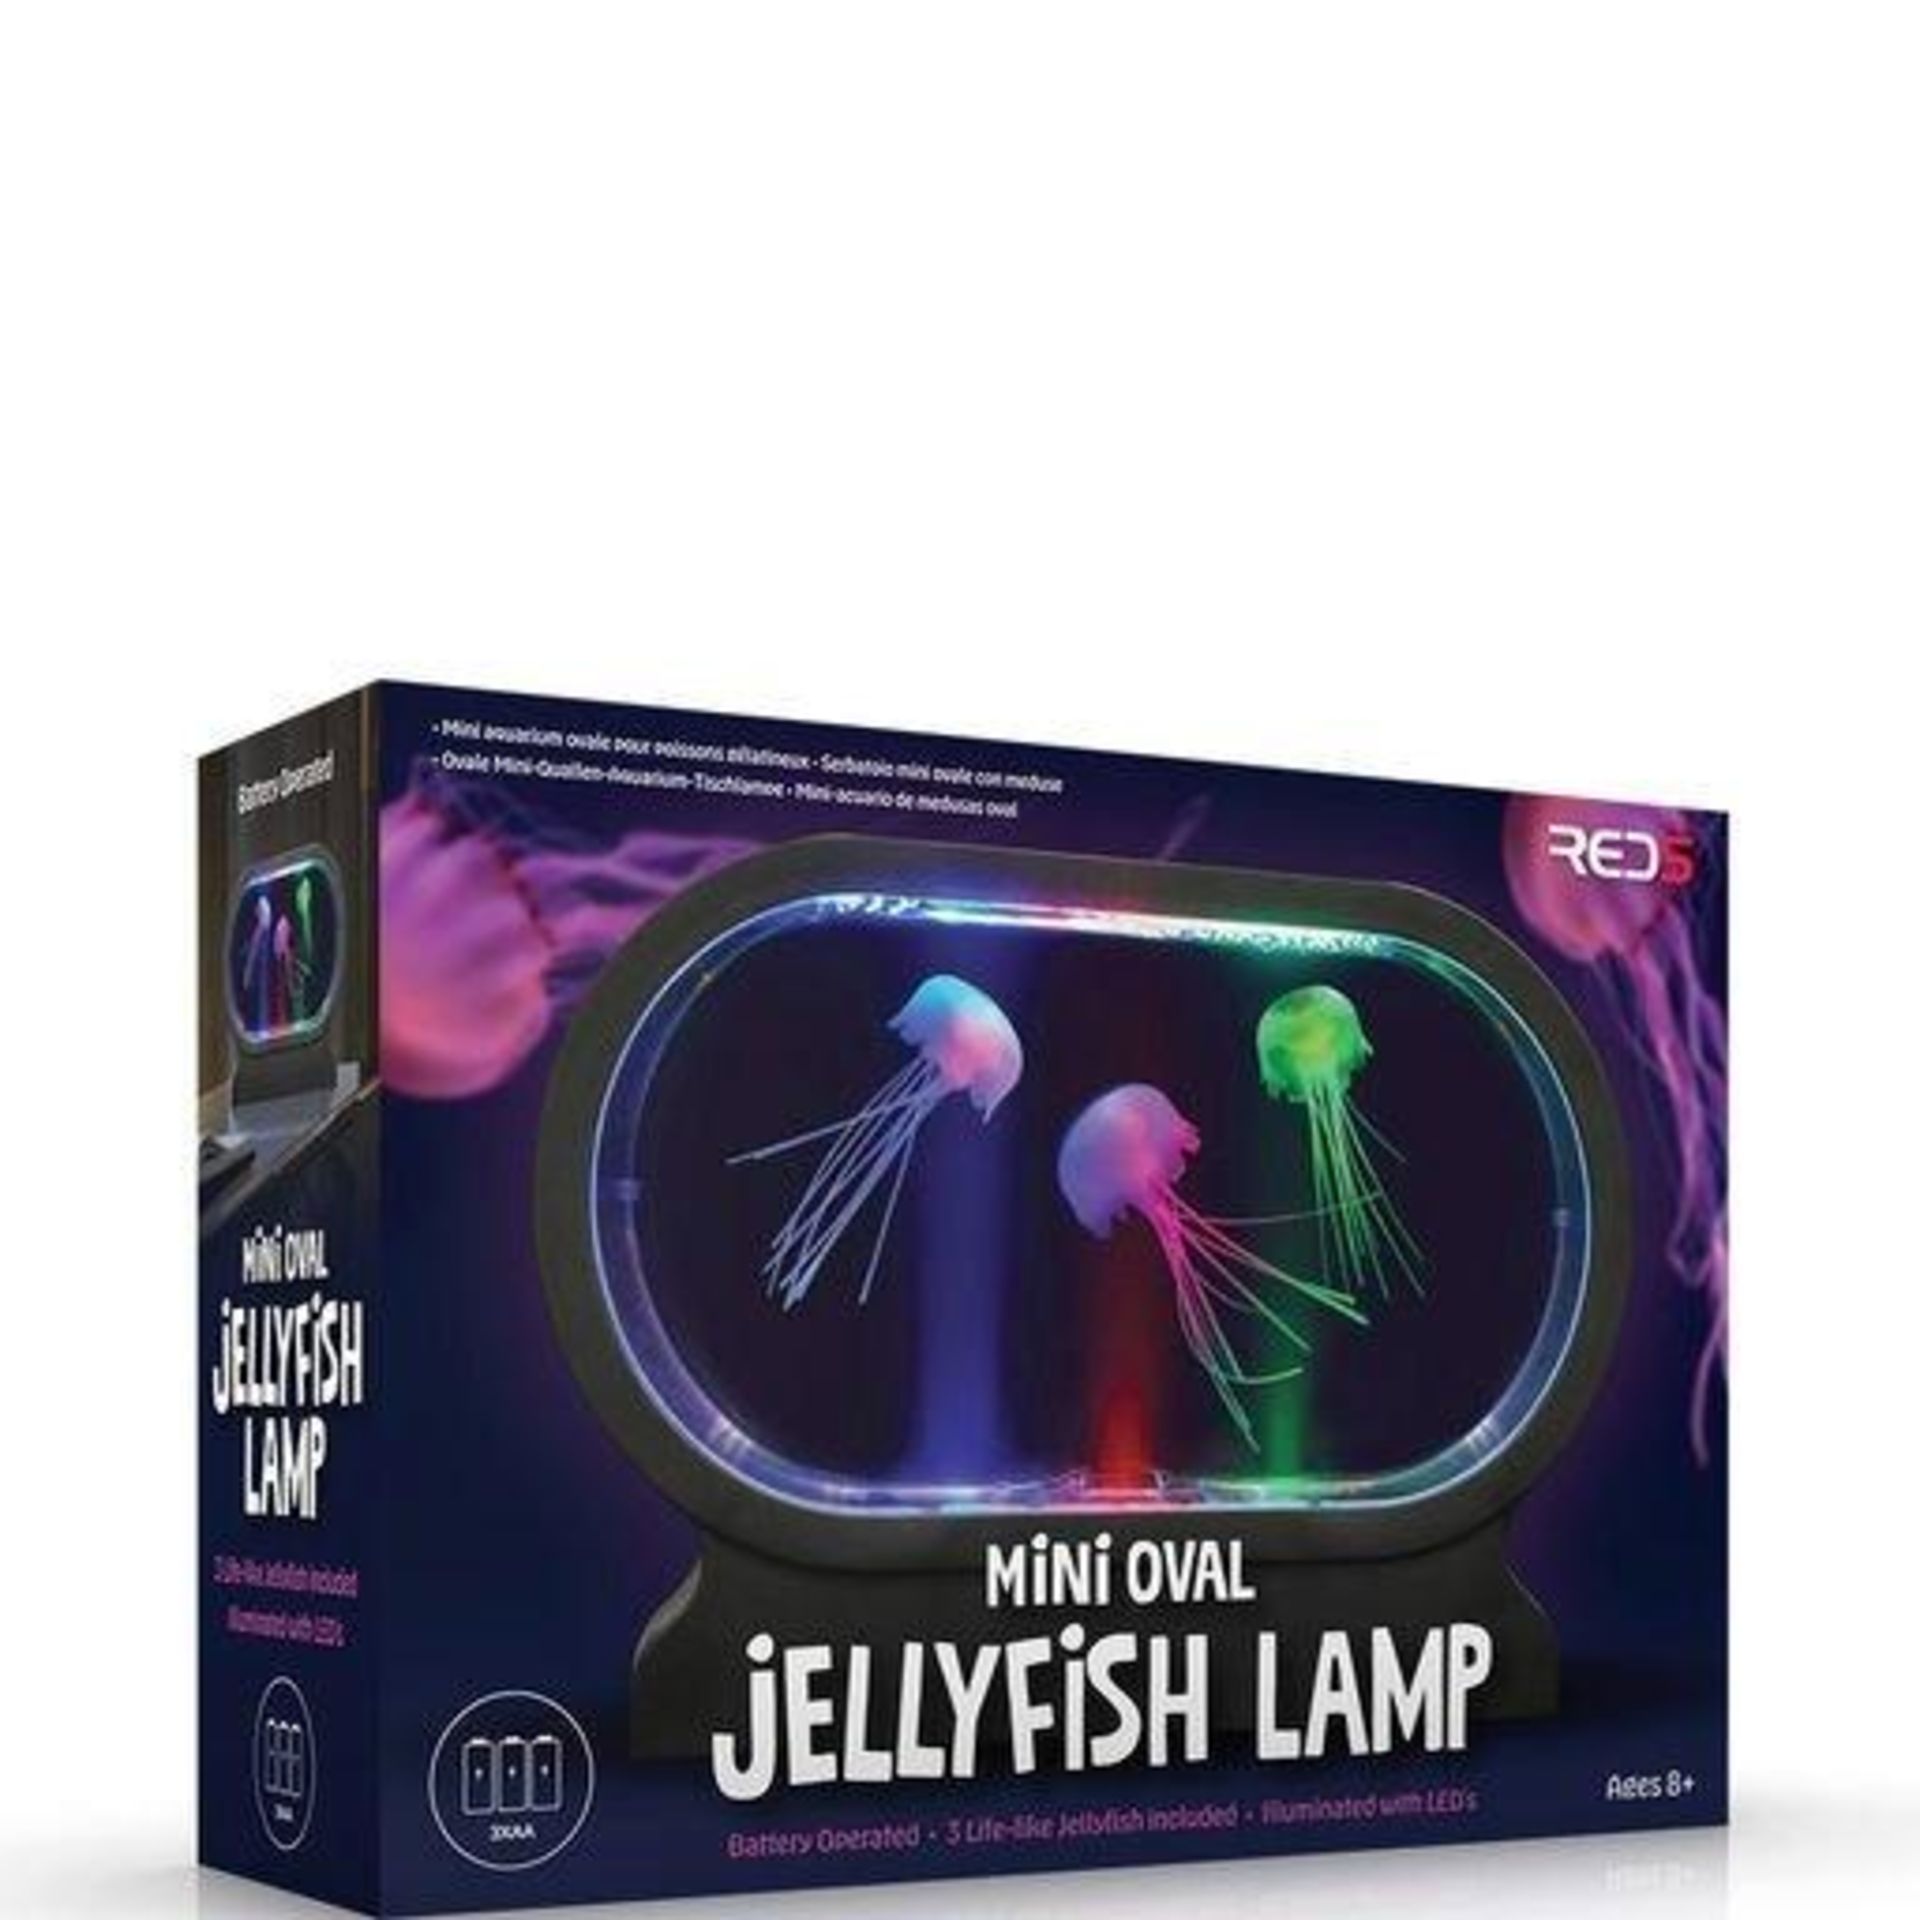 X 3 Red5 Mini Oval Jellyfish Lamp RRP £25 Each